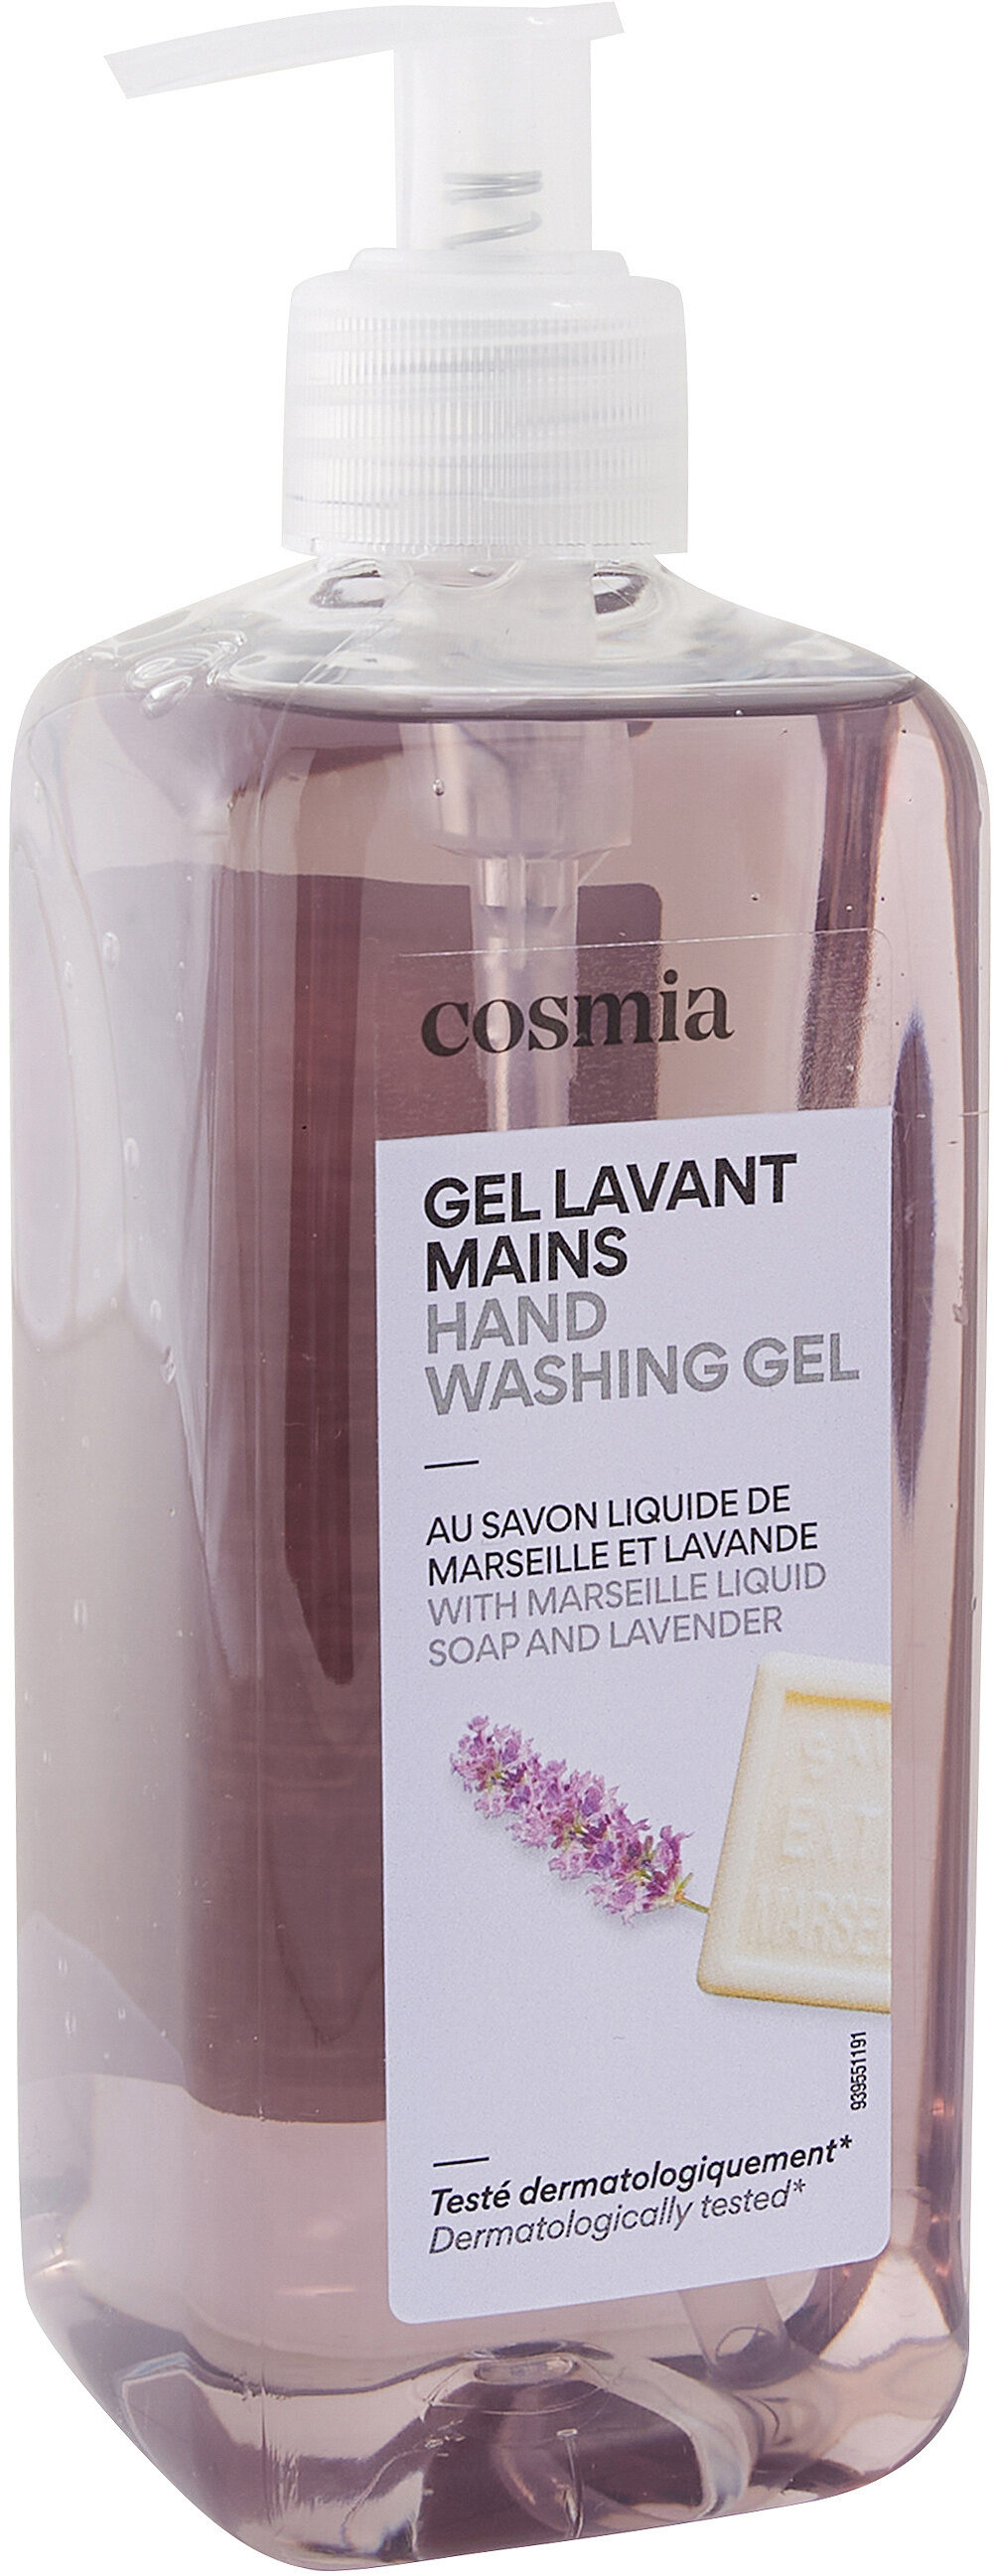 Cosmia savon main marseille et lavande 500 ml - Product - fr